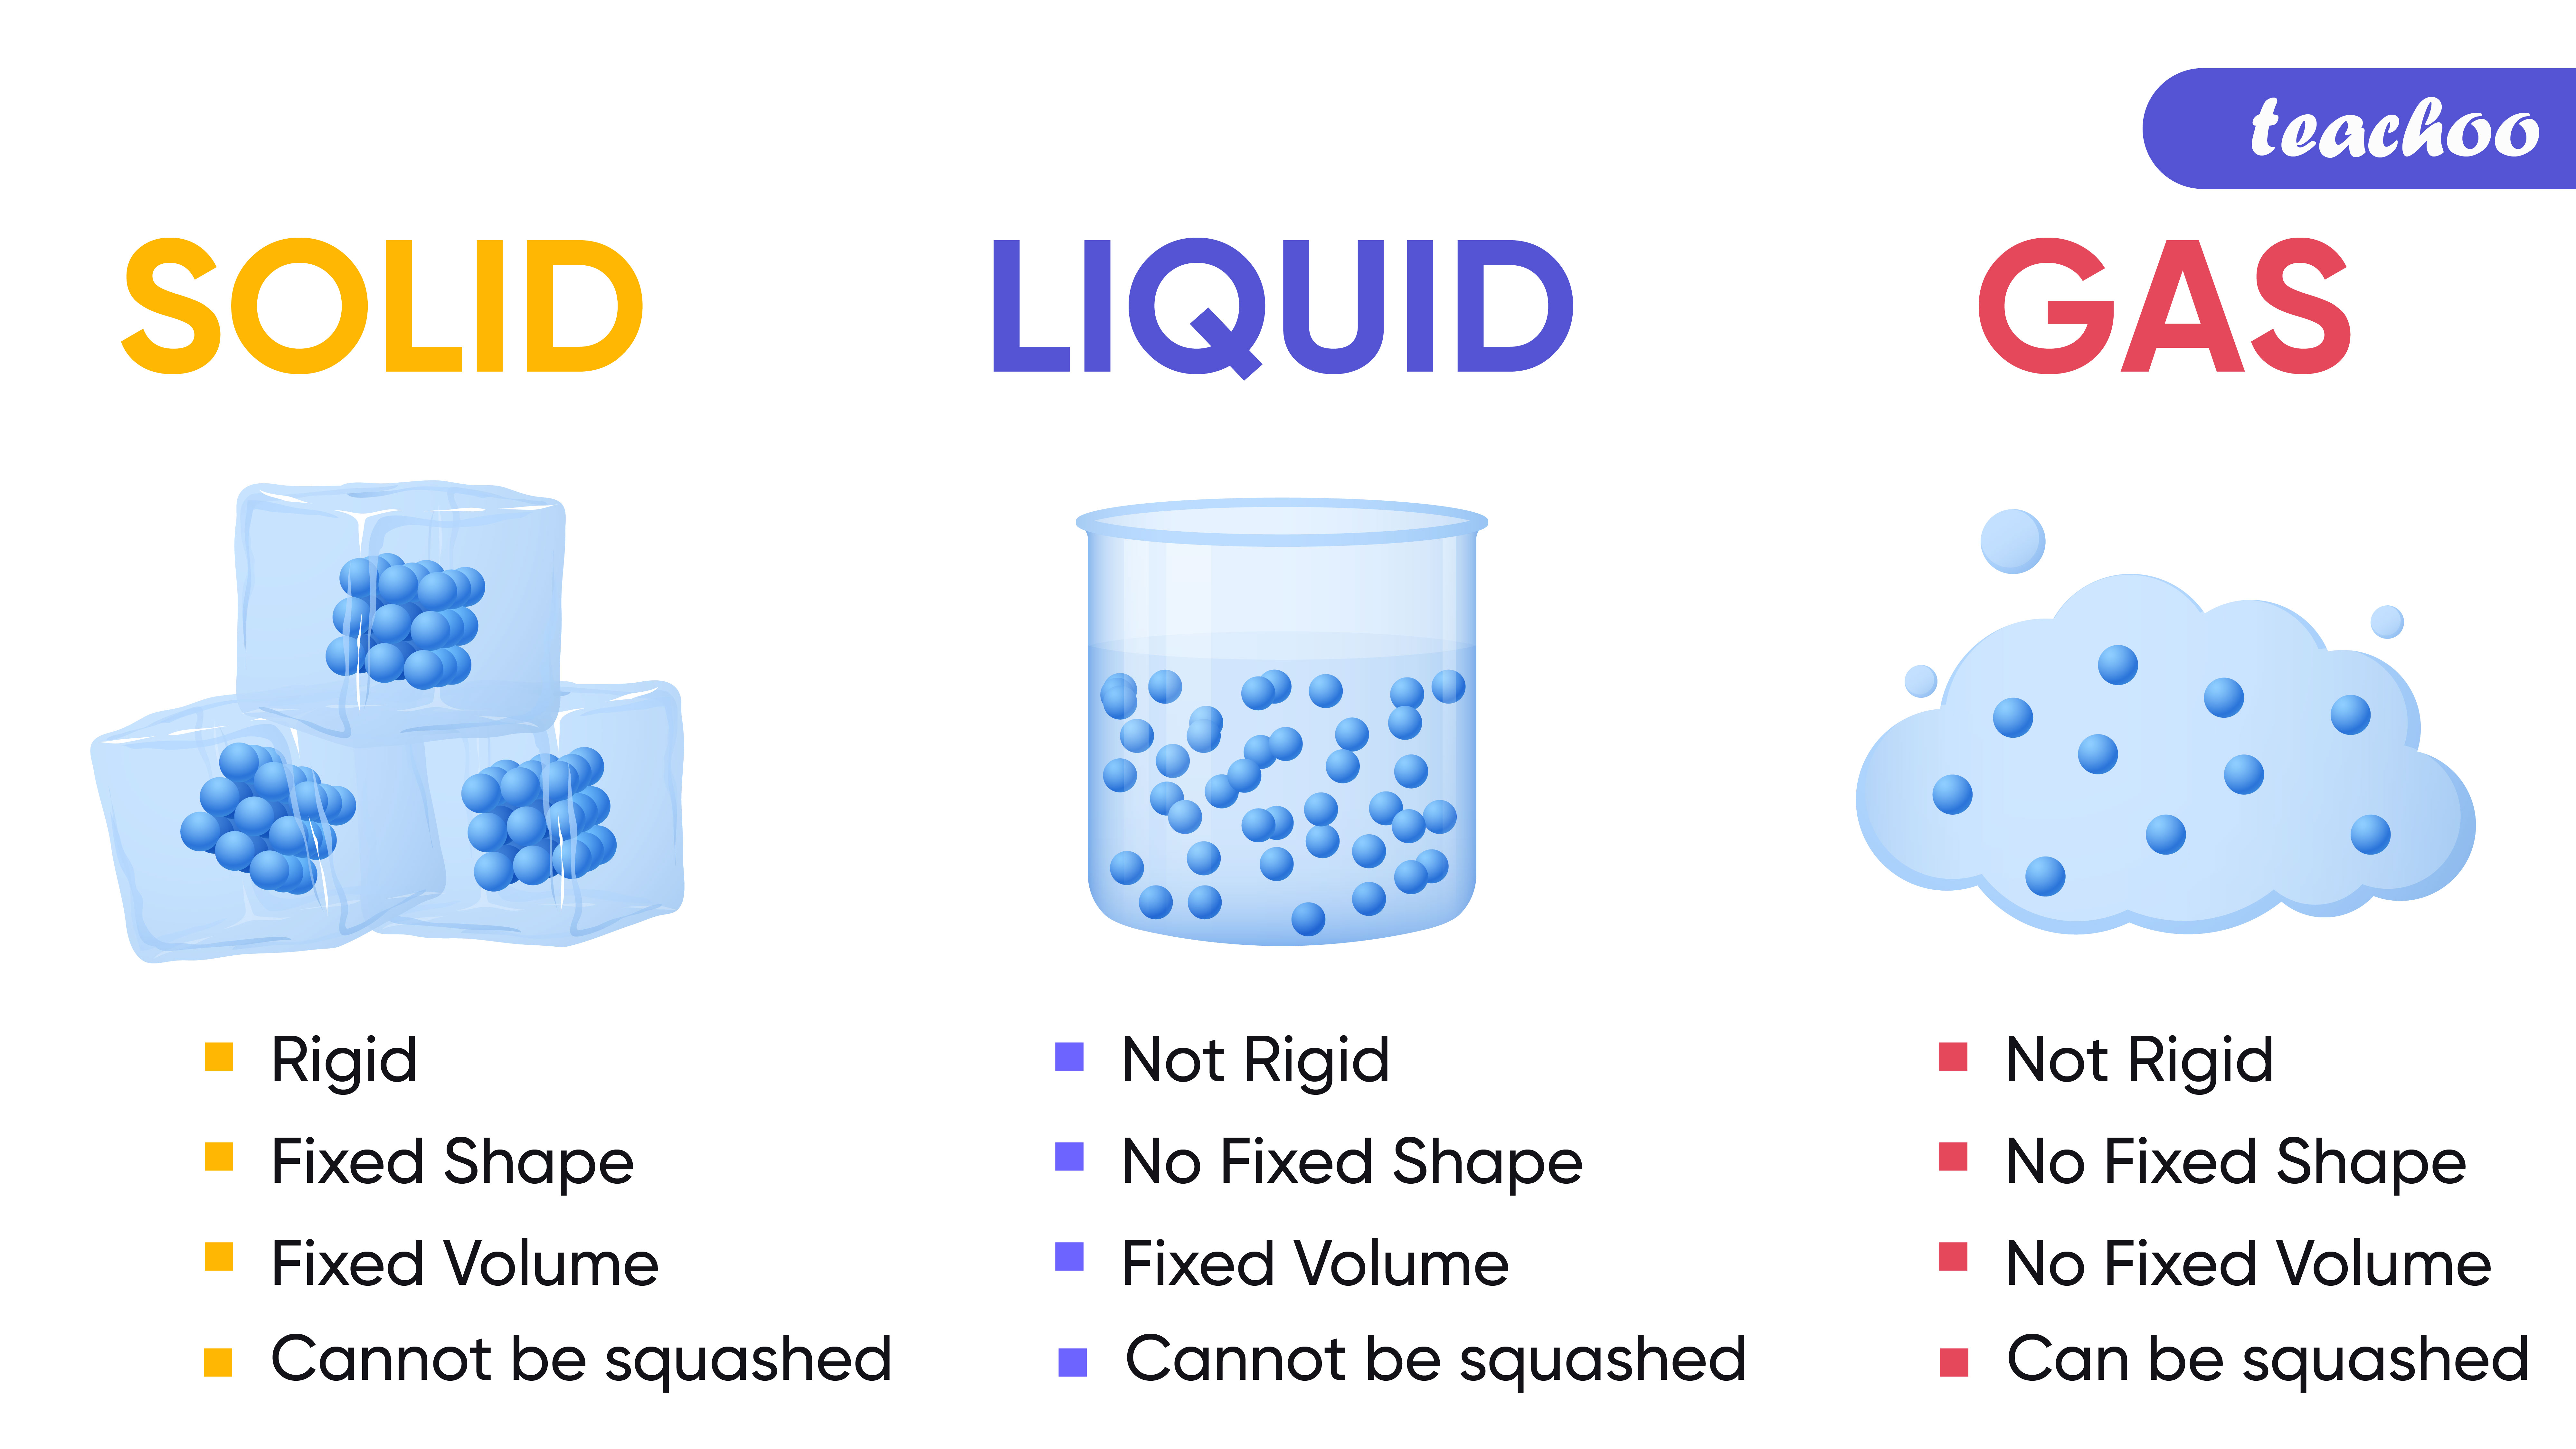 properties-of-solids-liquids-gases-compared-teachoo-science